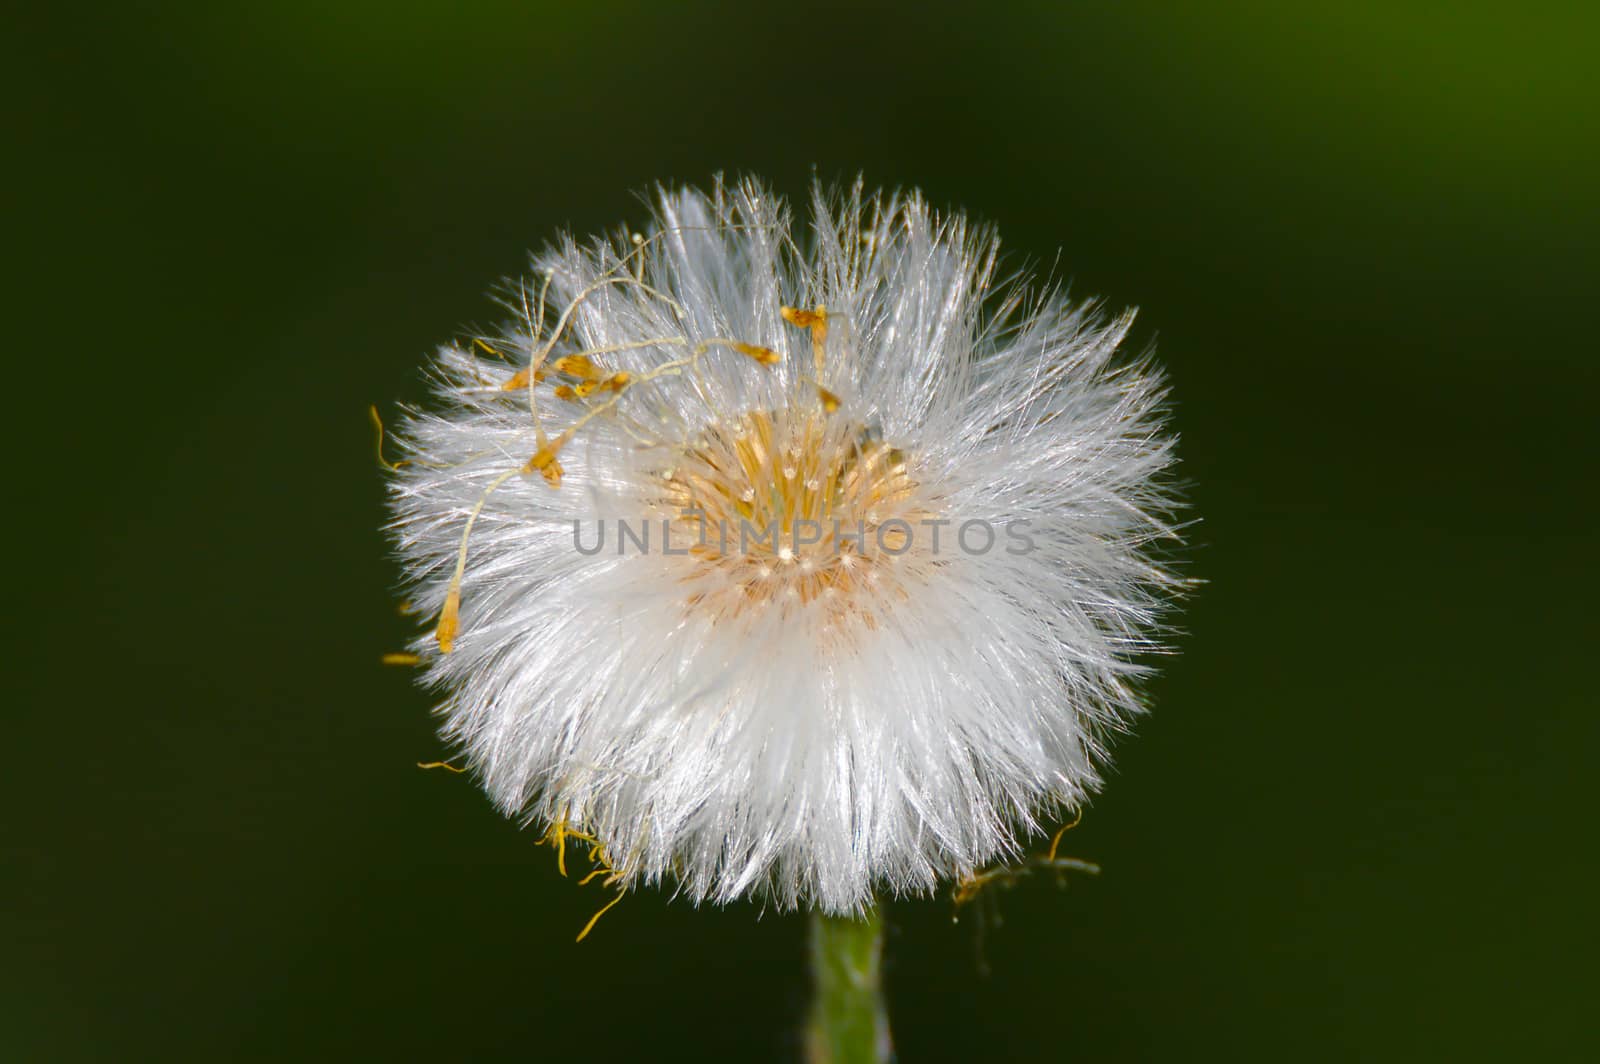 Closeup photo of fluffy ball of dandelion seeds.